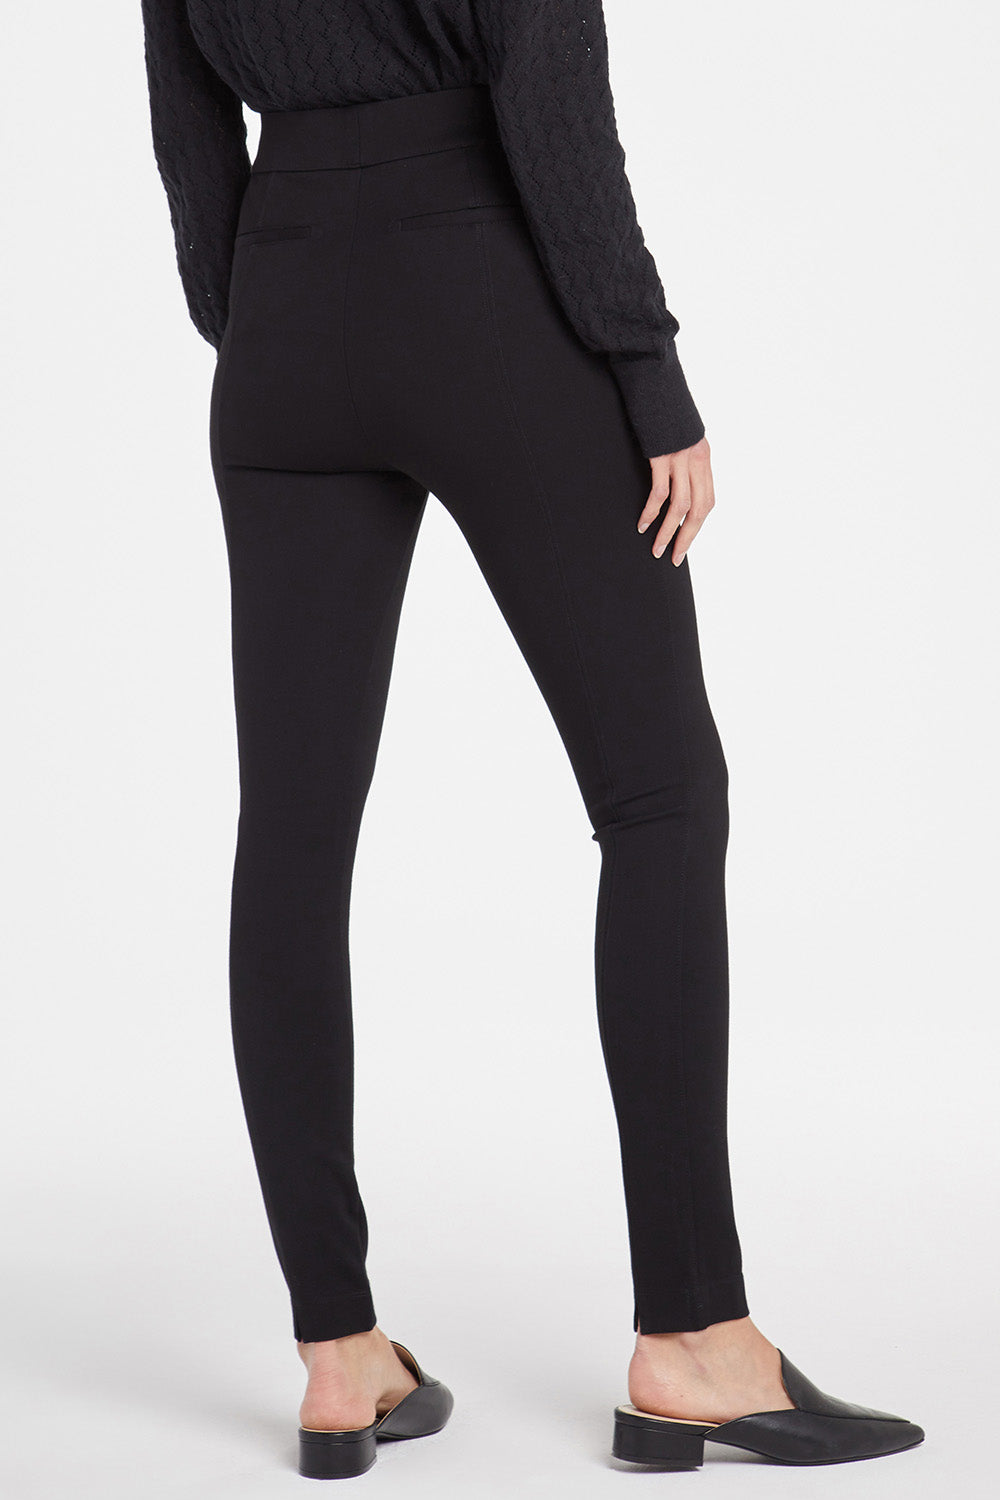 Buy Threadbare Black Slim Fit Ladies Stretch Ponte Trousers from Next USA